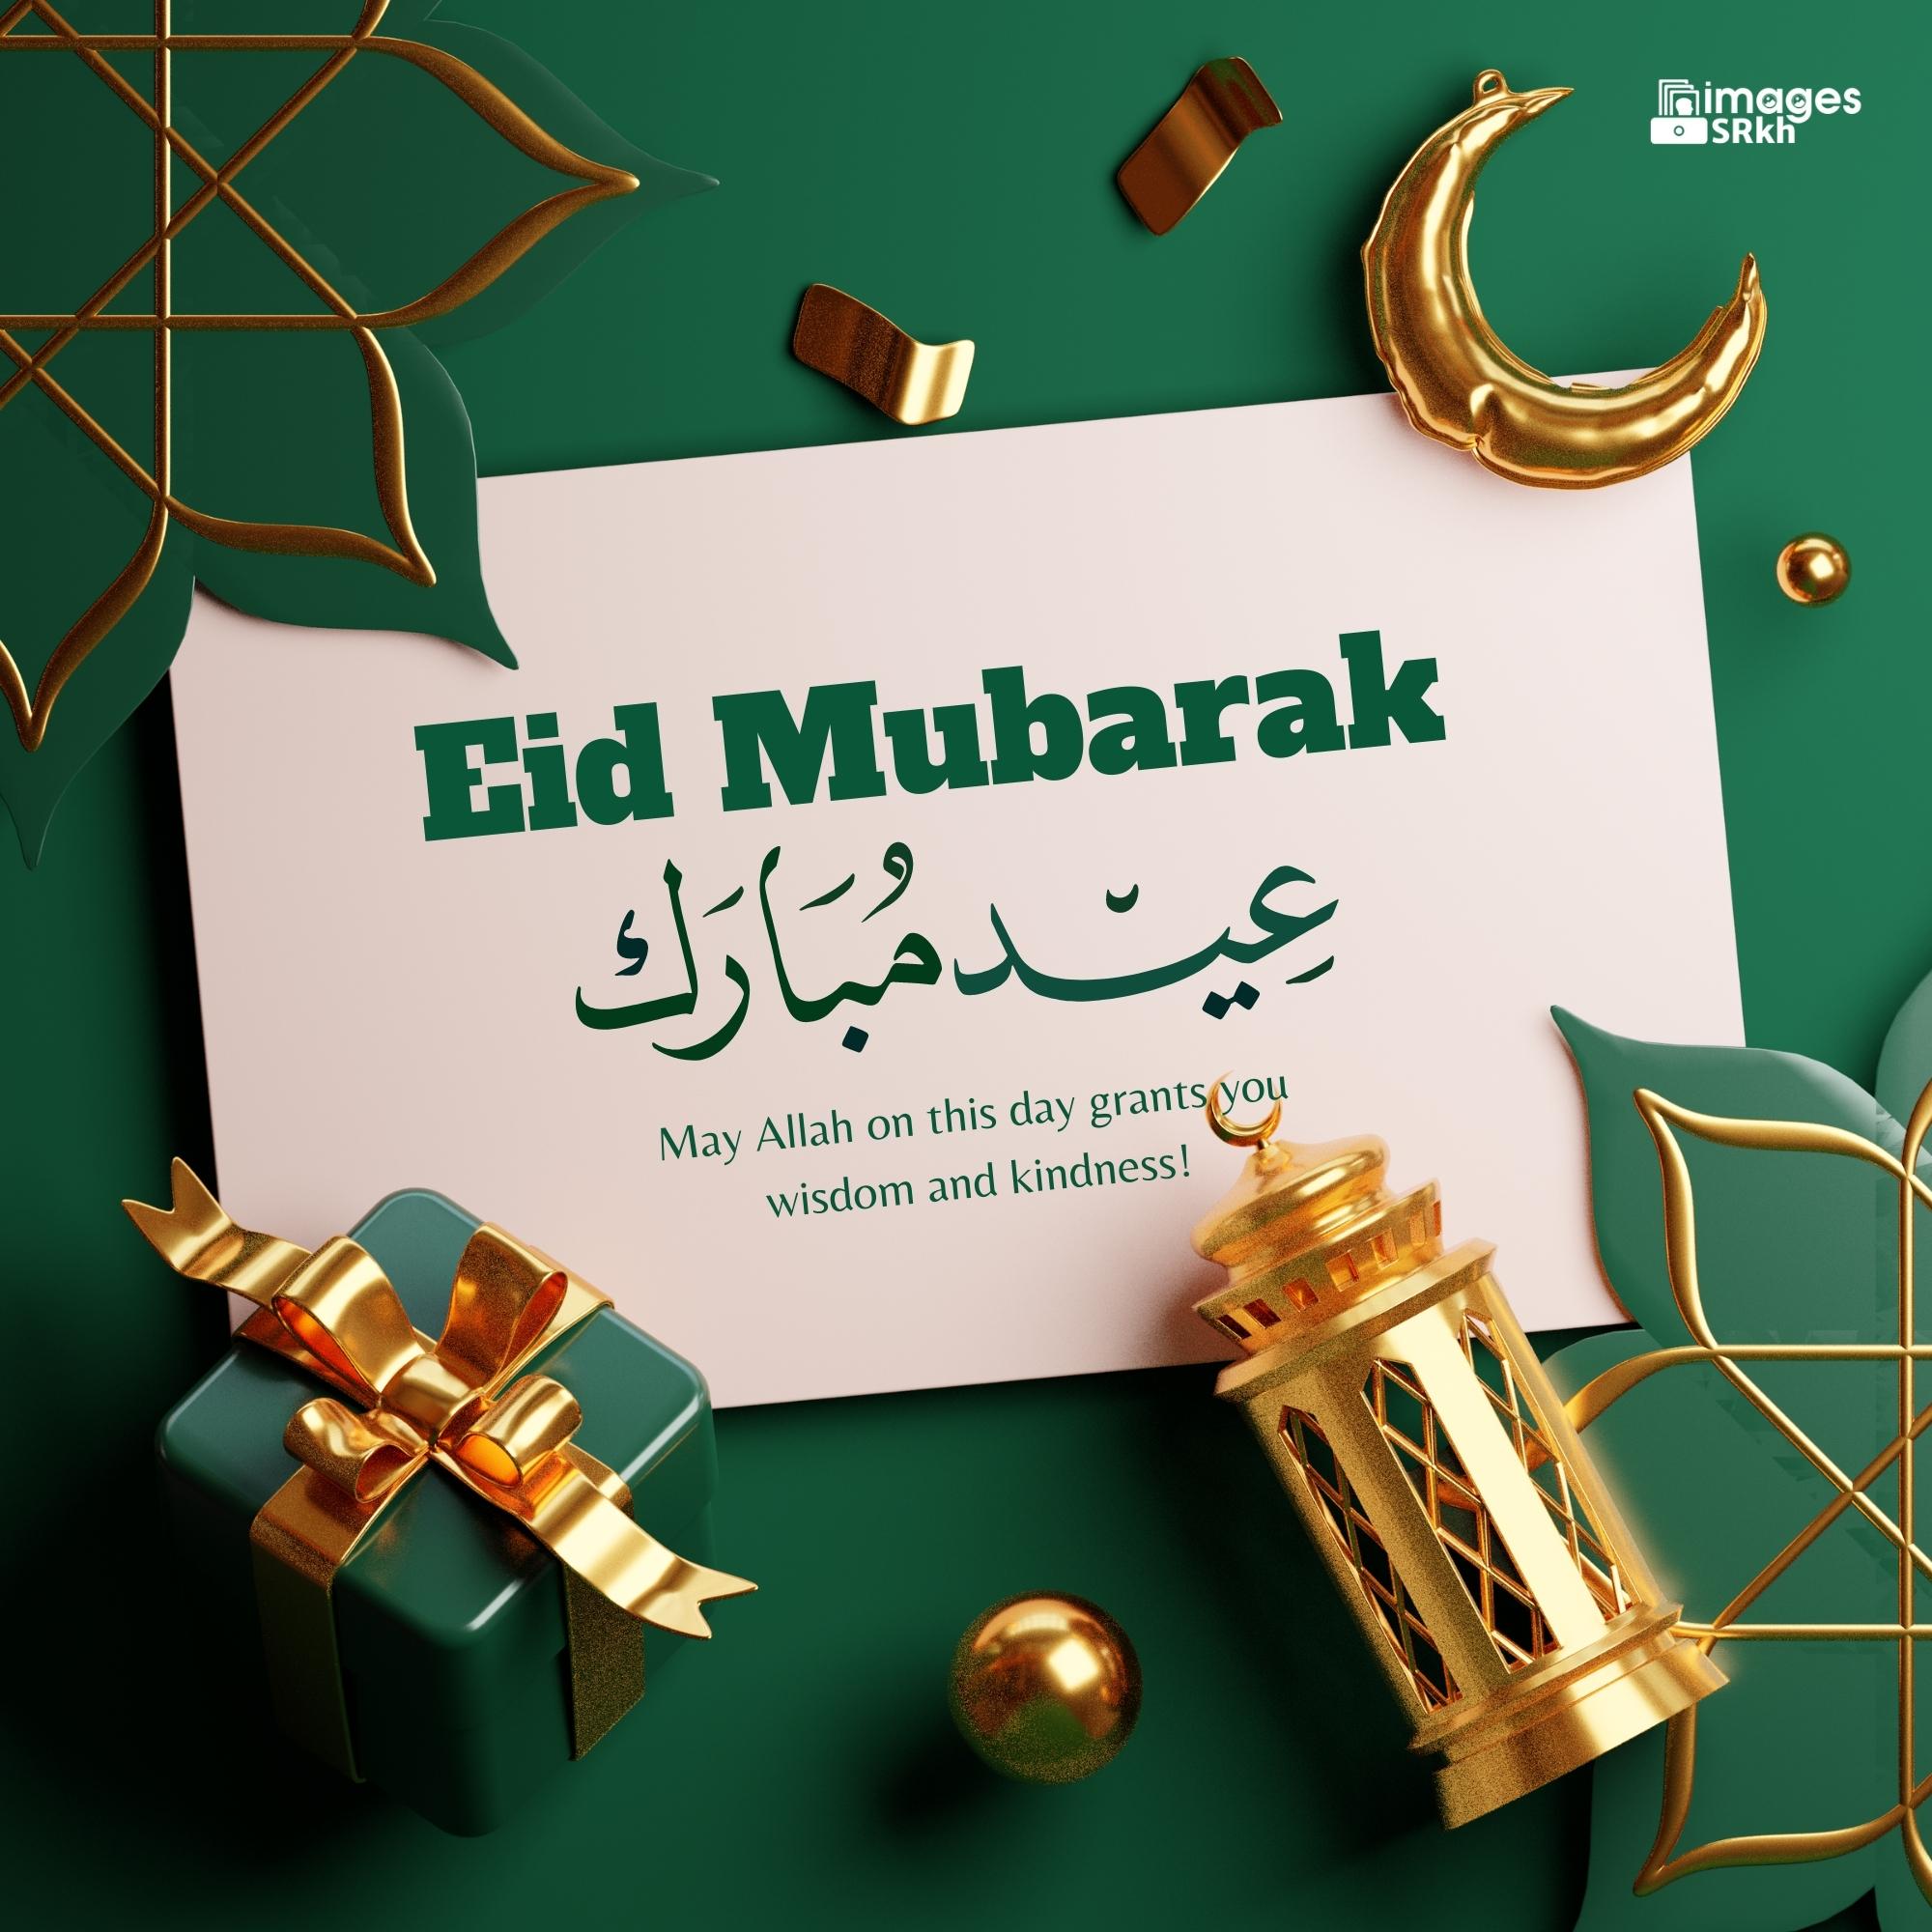 Eid Mubarak Photos (3) | Download free in Hd Quality | imagesSRkh